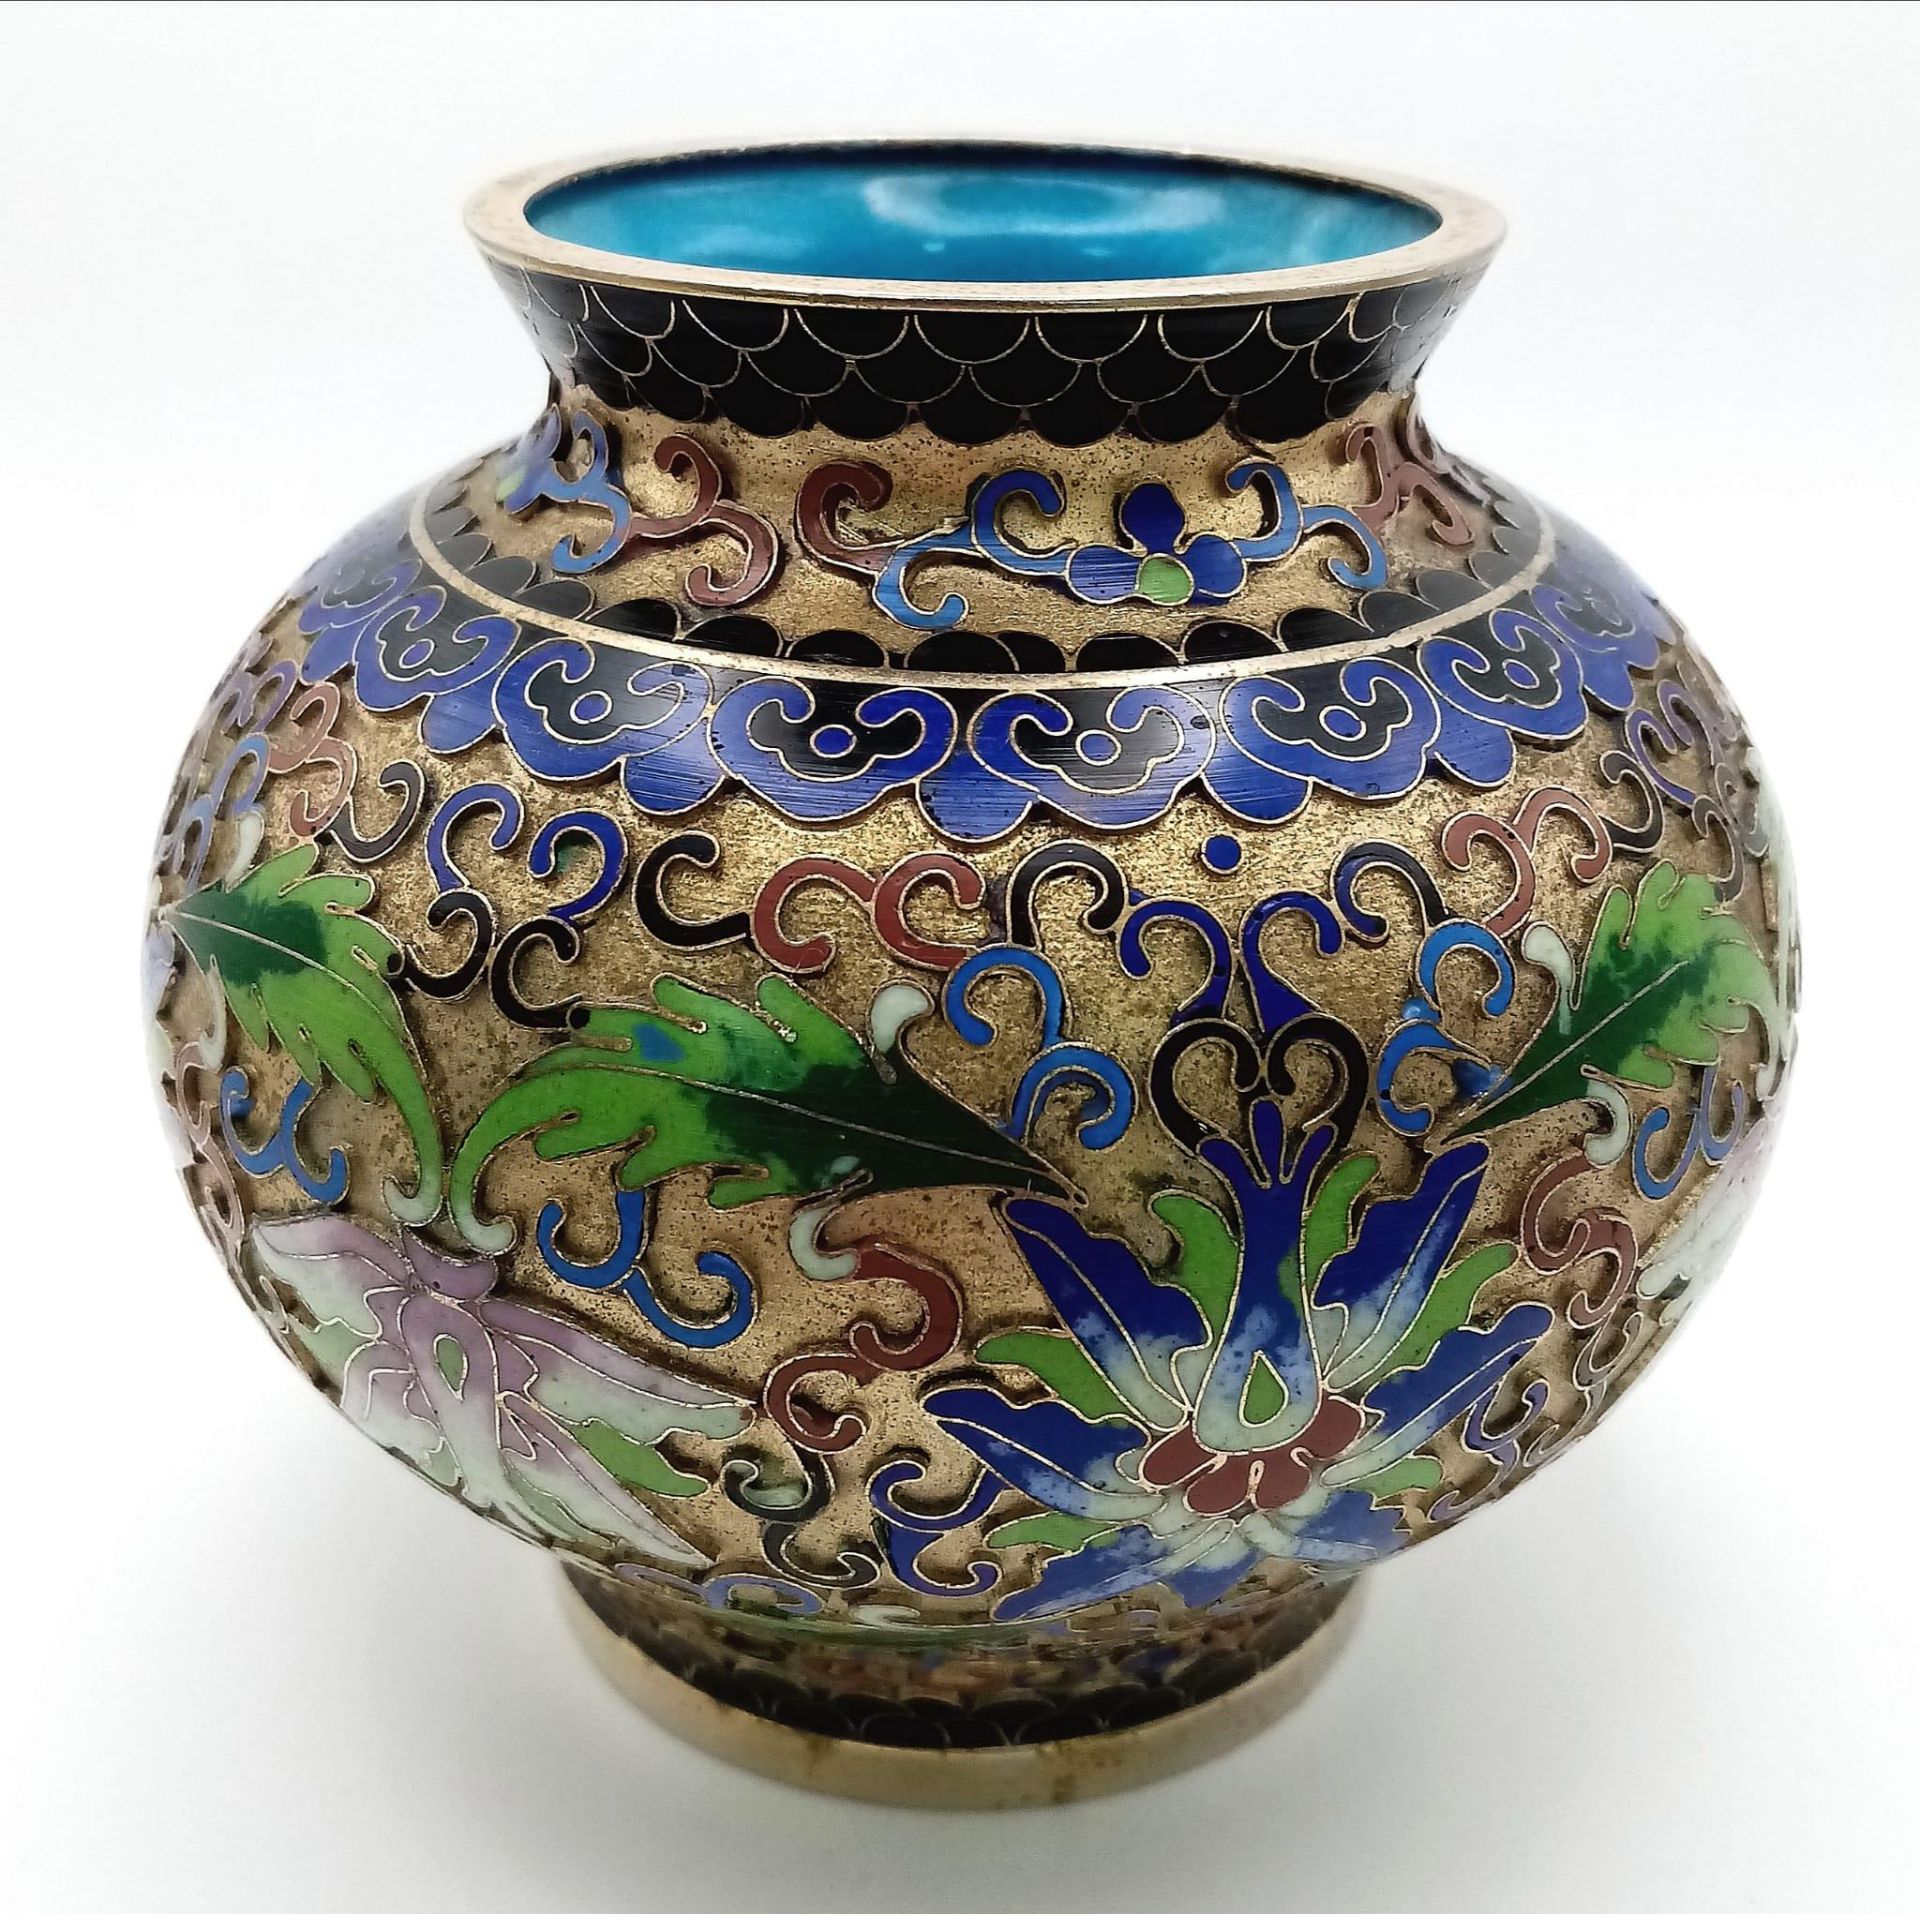 Stunning vintage Chinese Cloisonné Enamel Circular Pot. Wonderful floral decoration against a gold